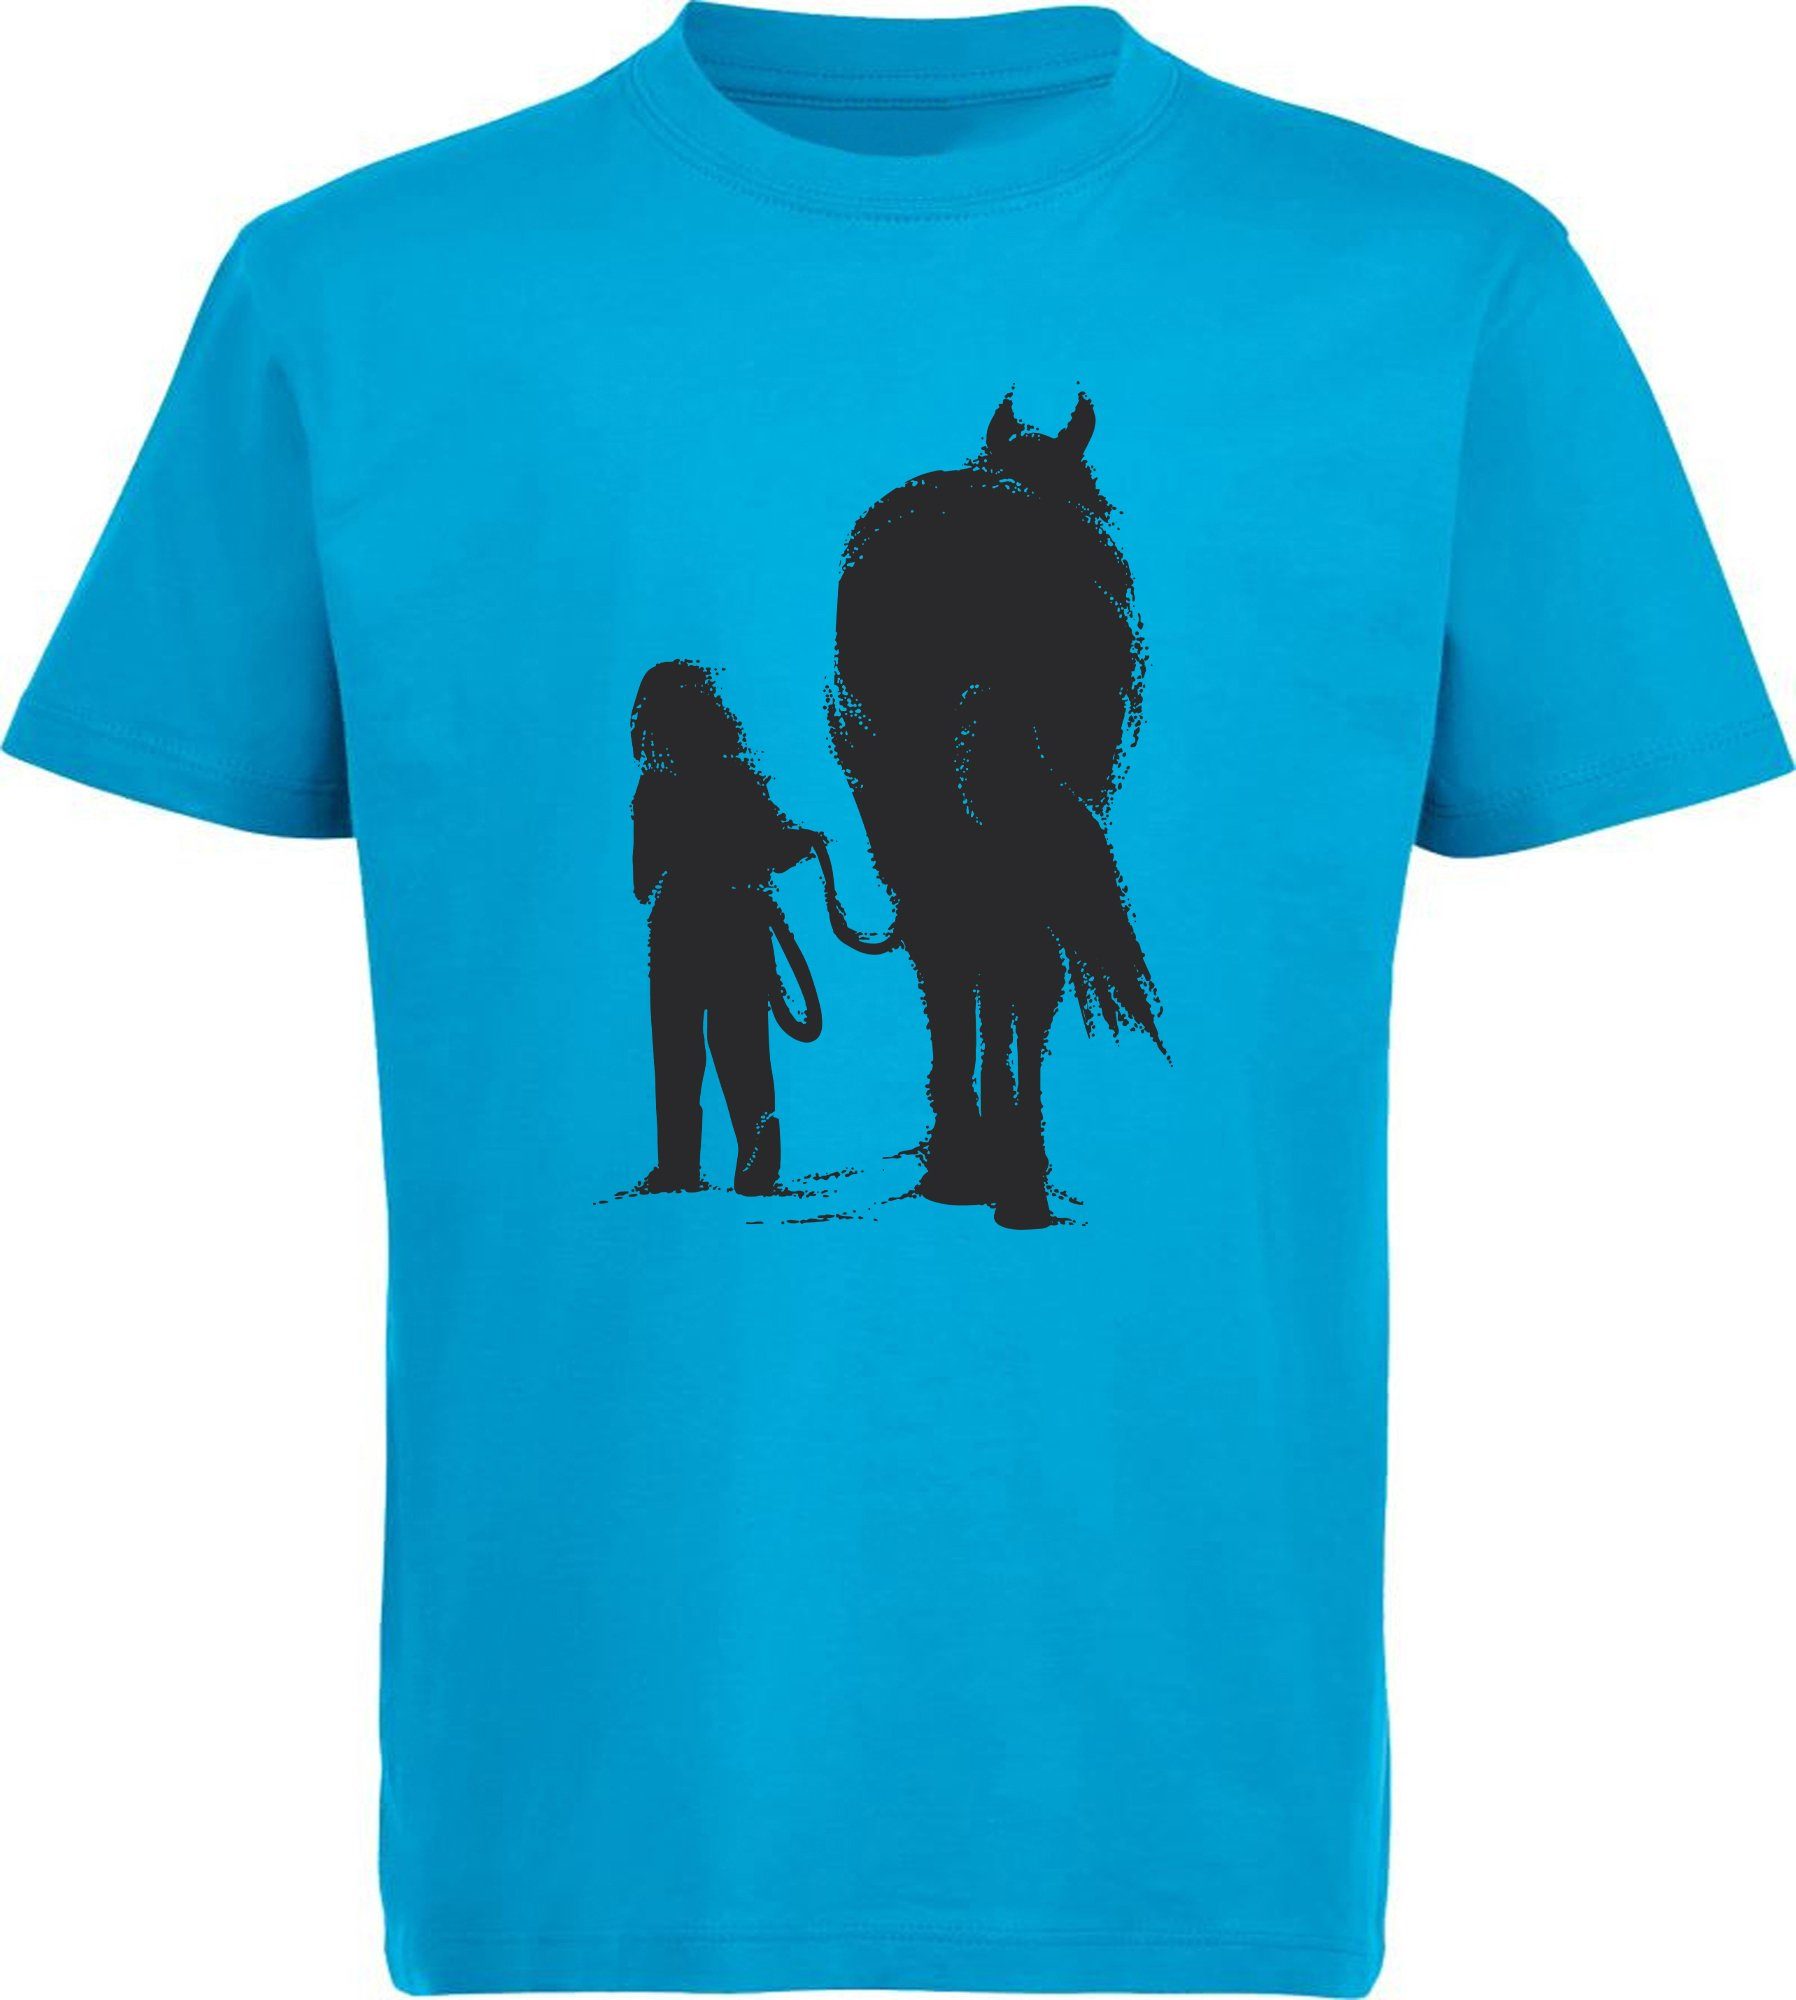 MyDesign24 T-Shirt Kinder Print Shirt bedruckt - Mädchen & Pferd beim Spaziergang Baumwollshirt mit Aufdruck, i250 aqua blau